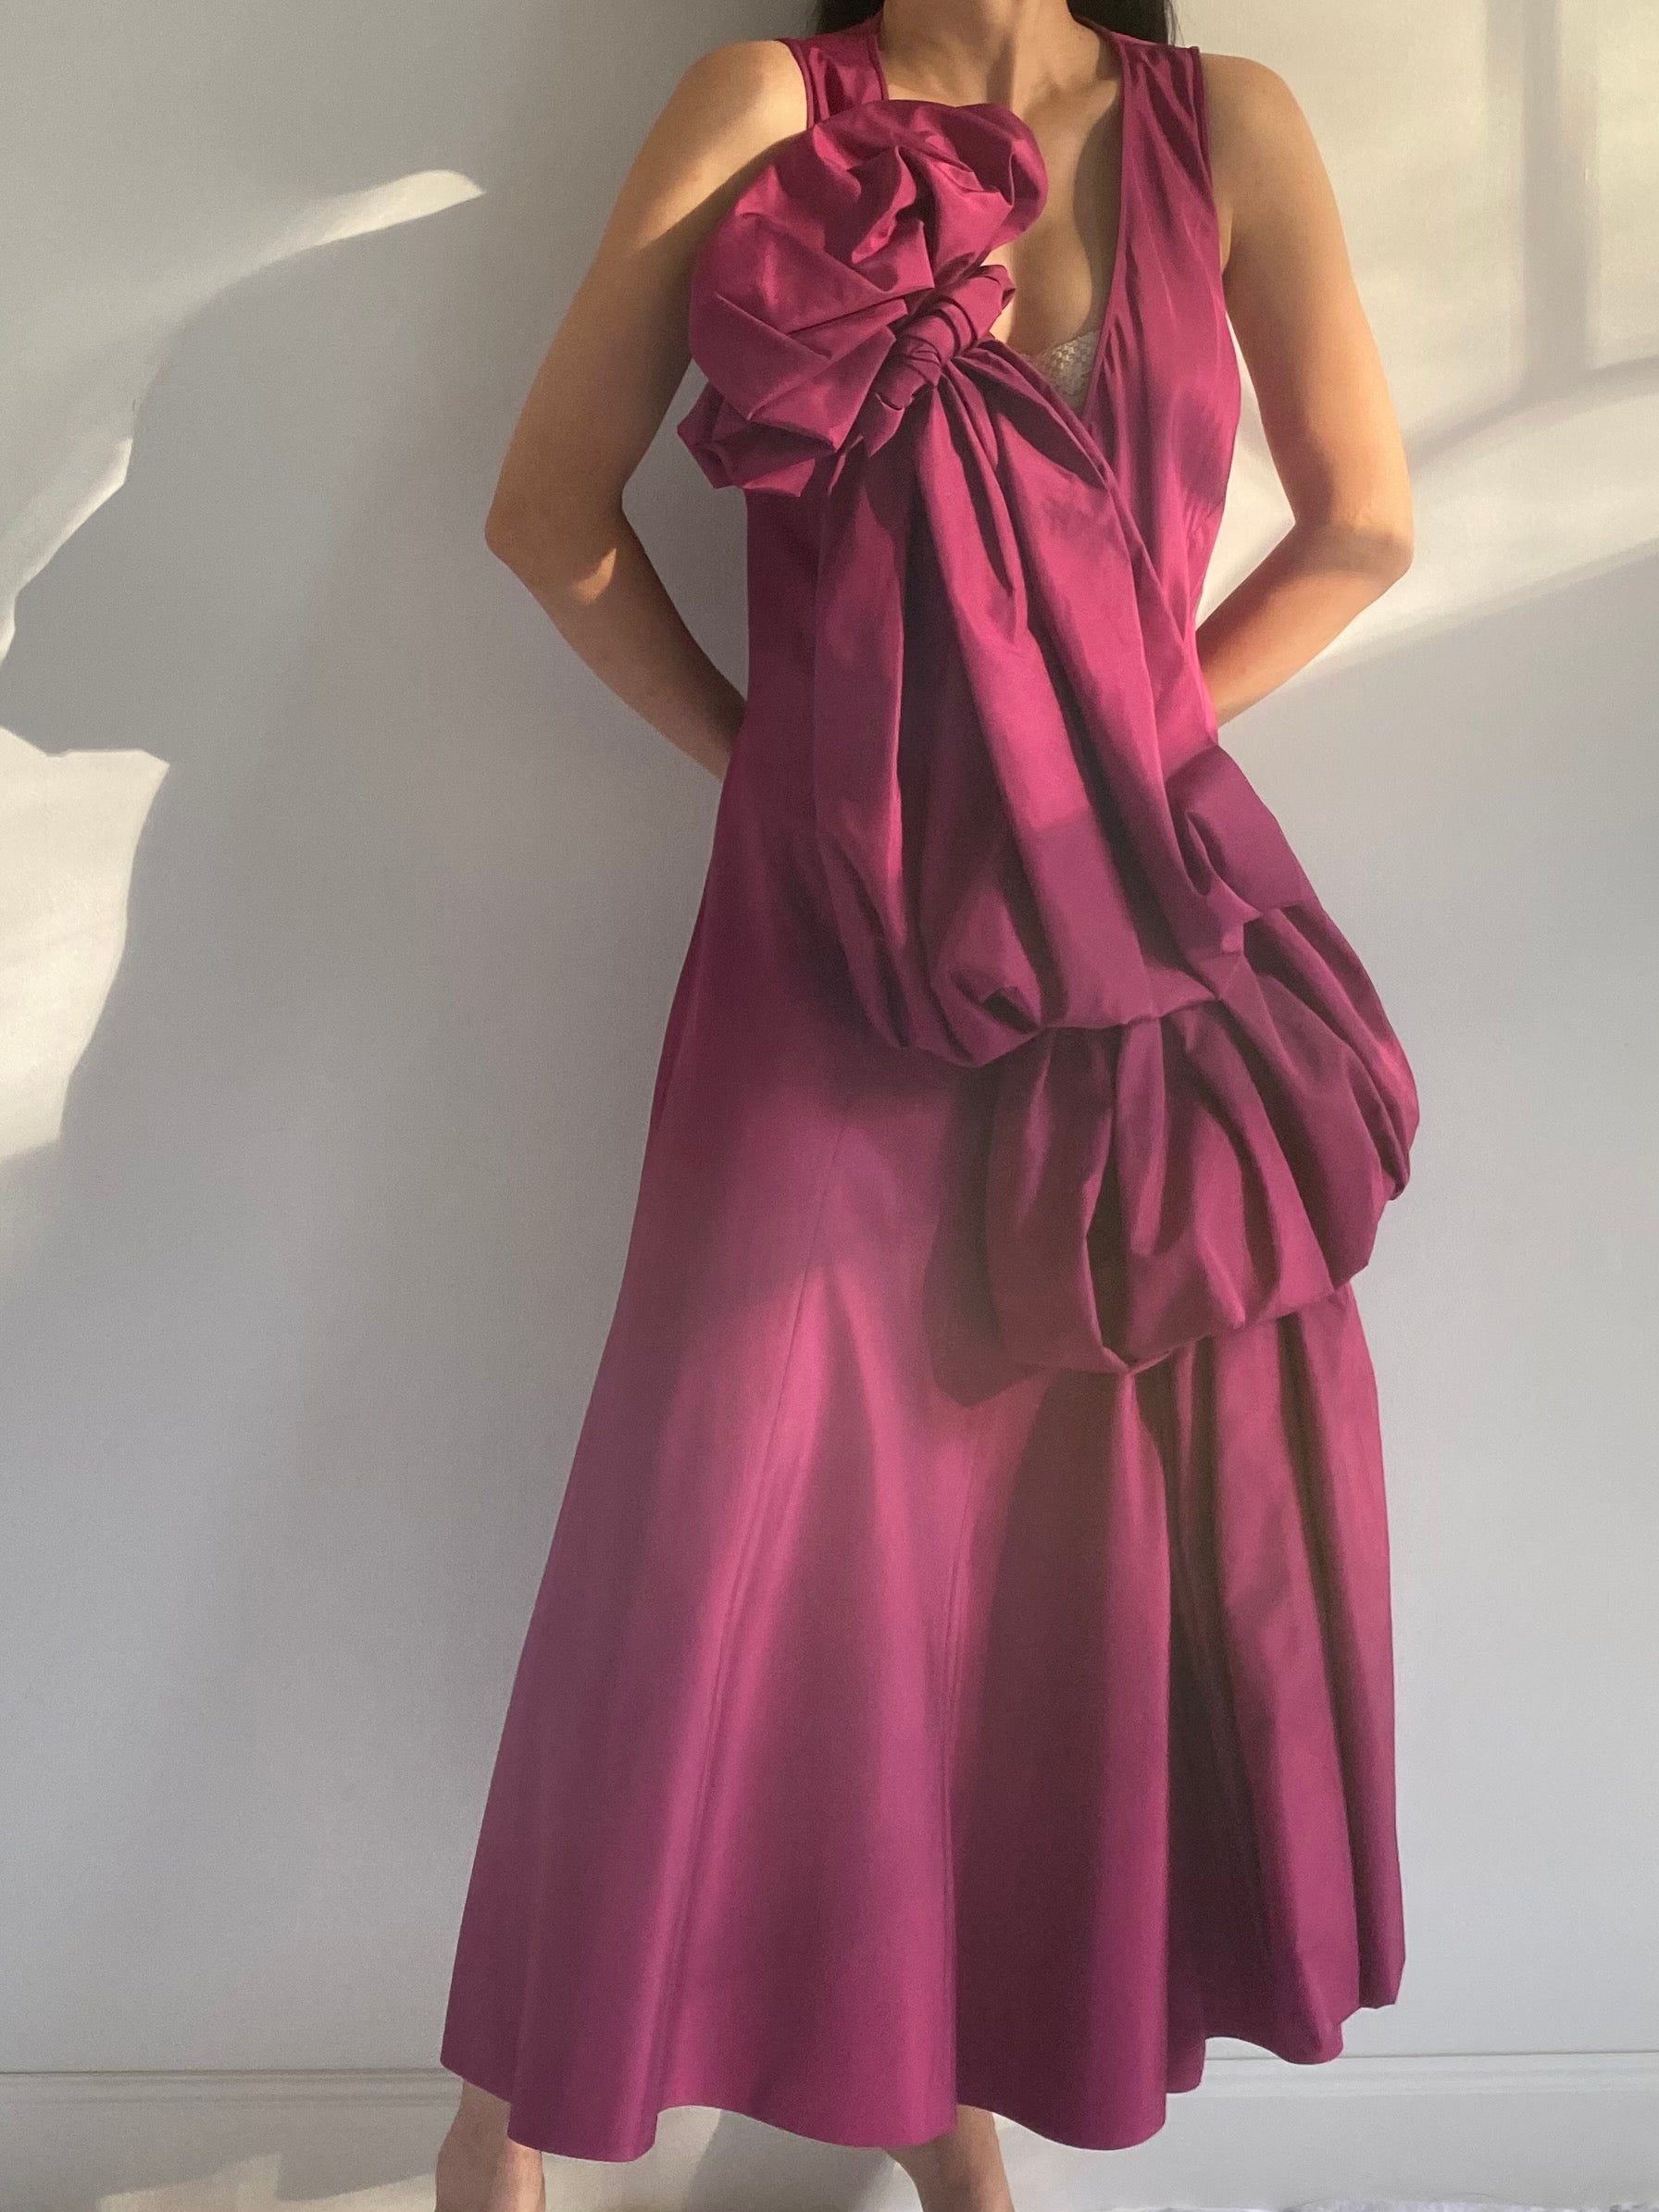 Y2K Marc Jacobs Grape Draped Dress - S 2/4